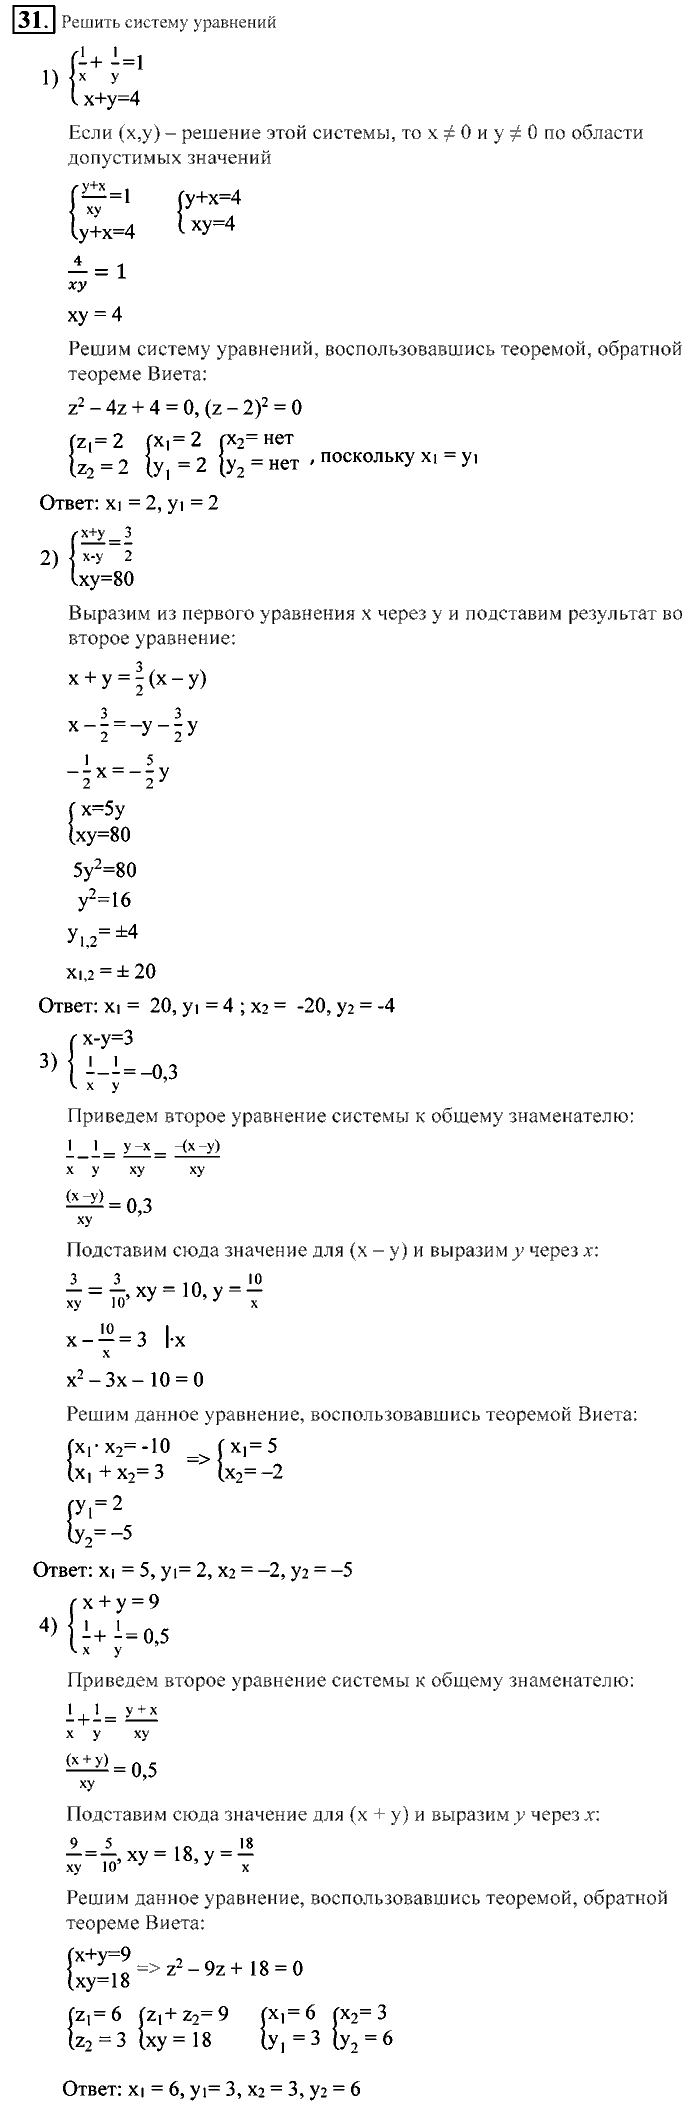 Алгебра, 9 класс, Алимов, Колягин, 2001, ------ Задание: 31